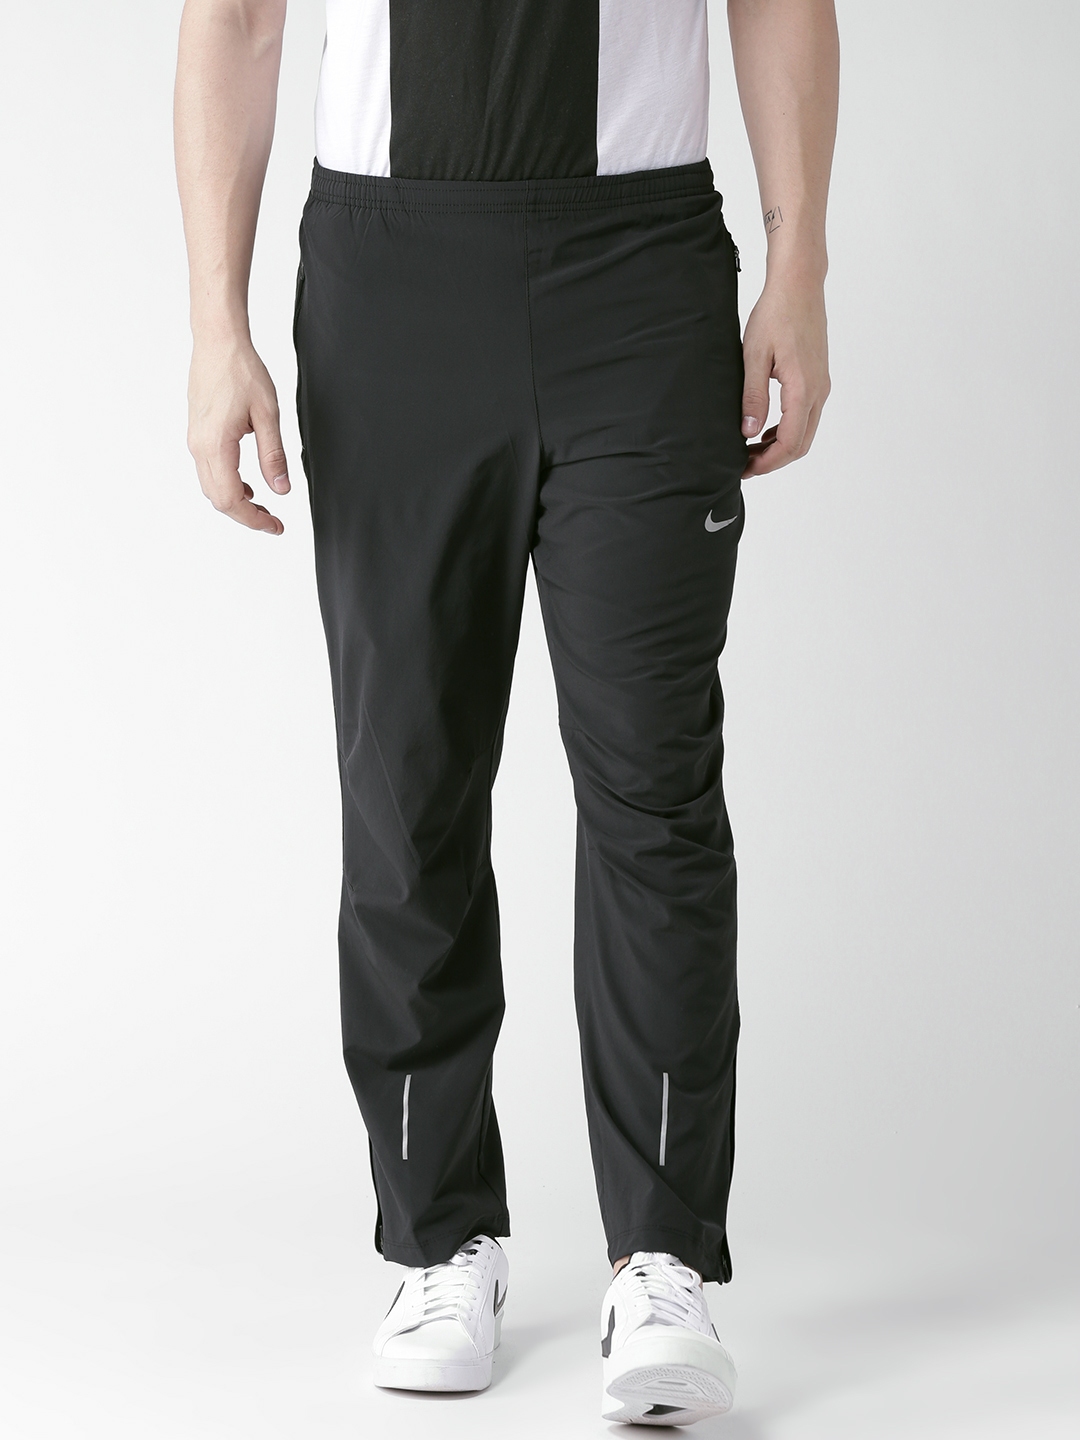 Nike Running Swoosh track pants in black  ASOS